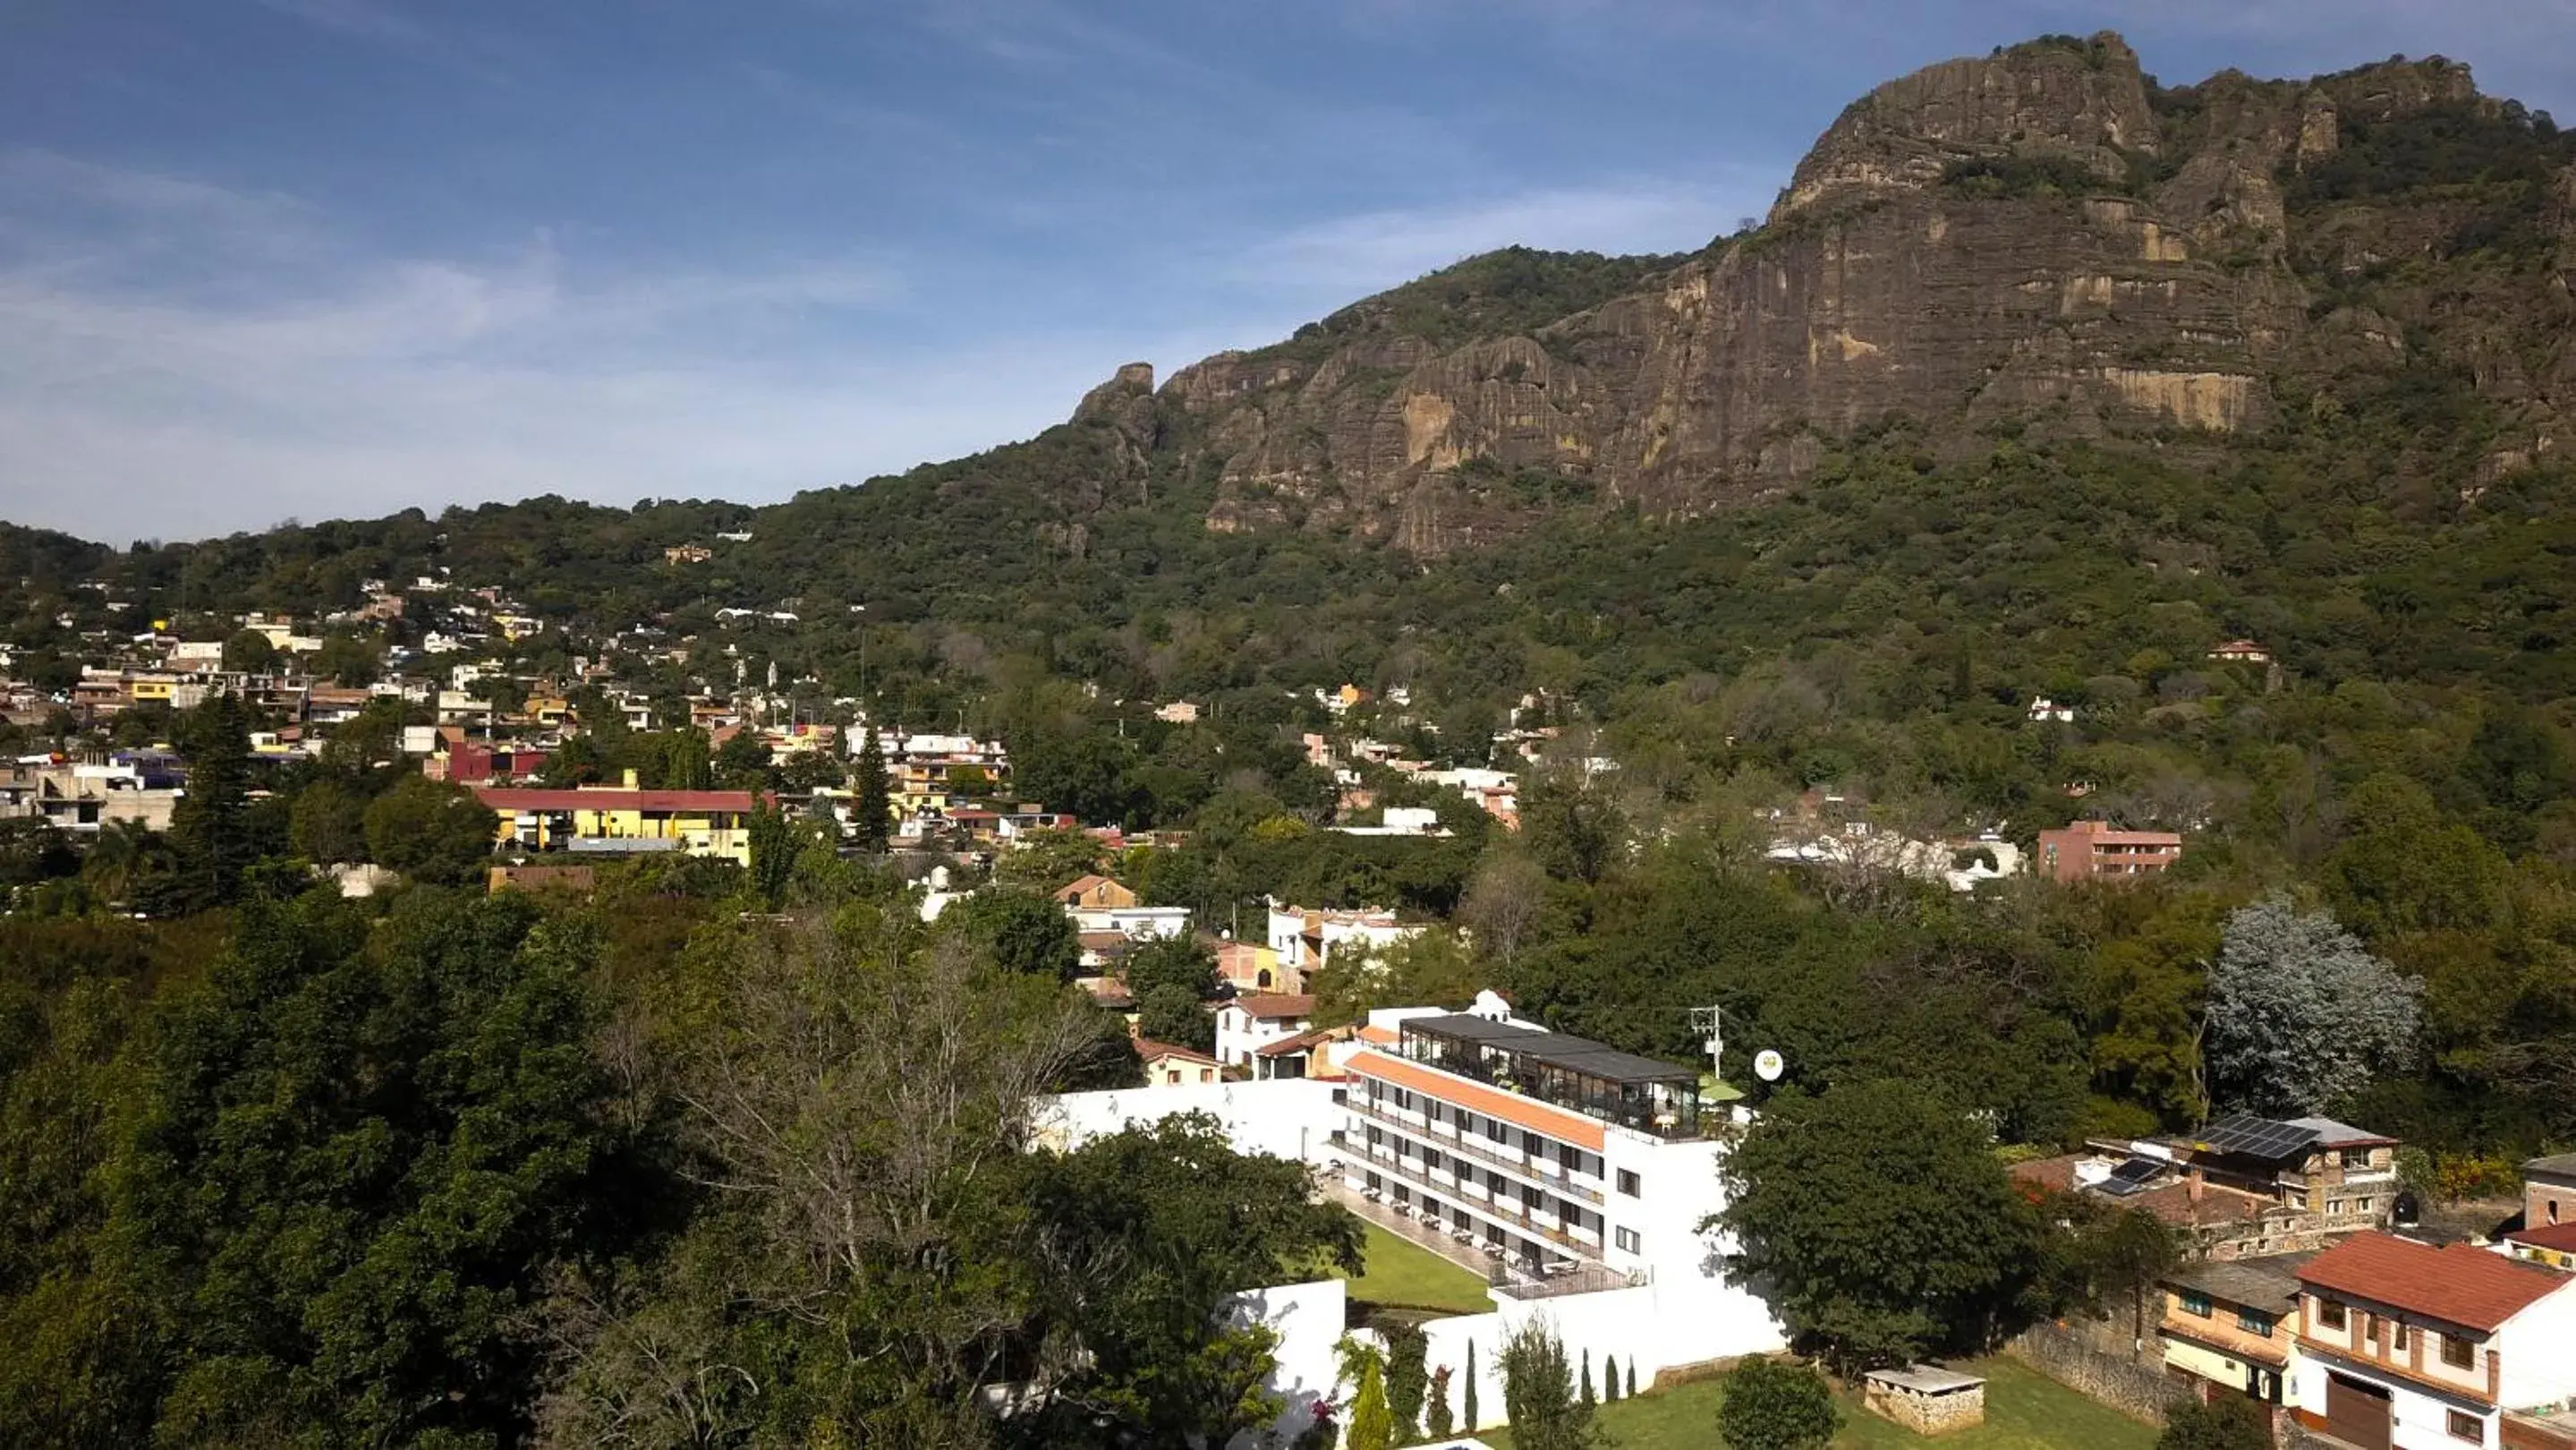 Off site, Bird's-eye View in Hotel Las Puertas de Tepoztlan